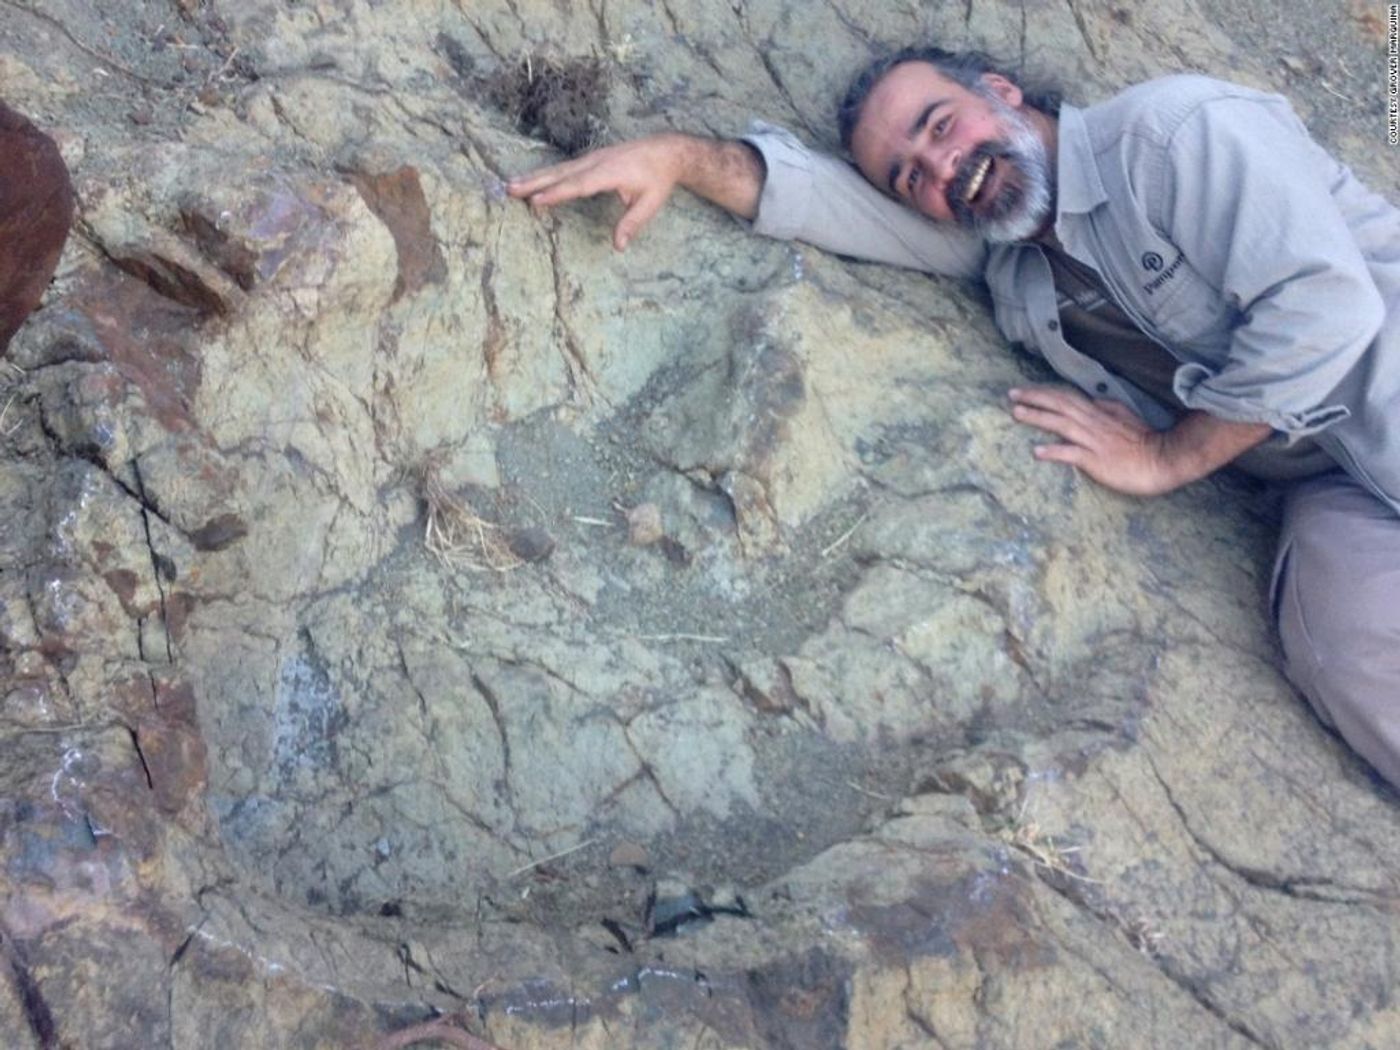 Scientist Sebastian Apesteguia poses for a photo next to the massive footprint.